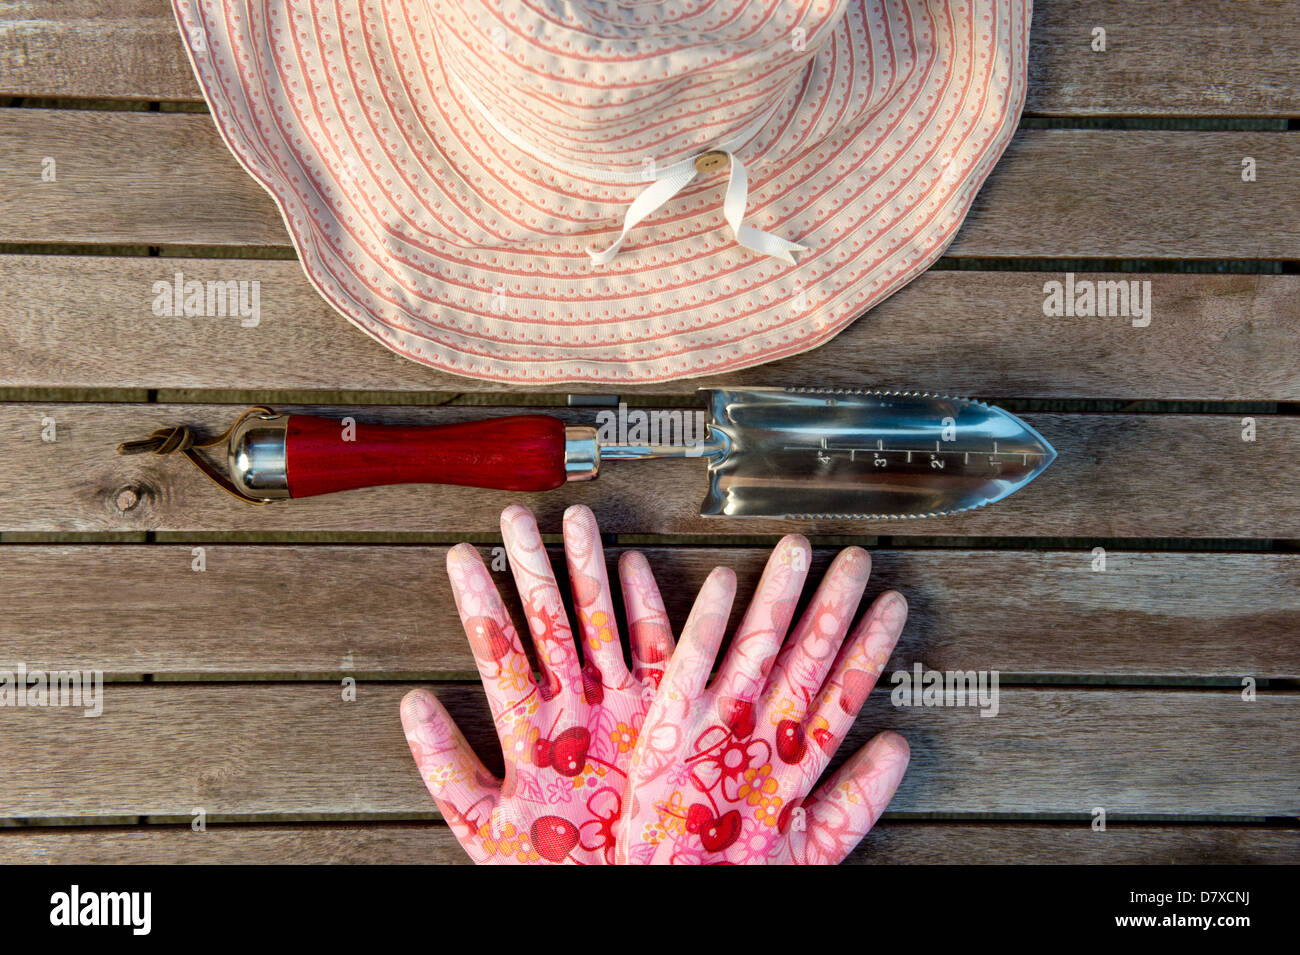 Arrangement of gardening tools - sun hat, gloss, and trowel Stock Photo